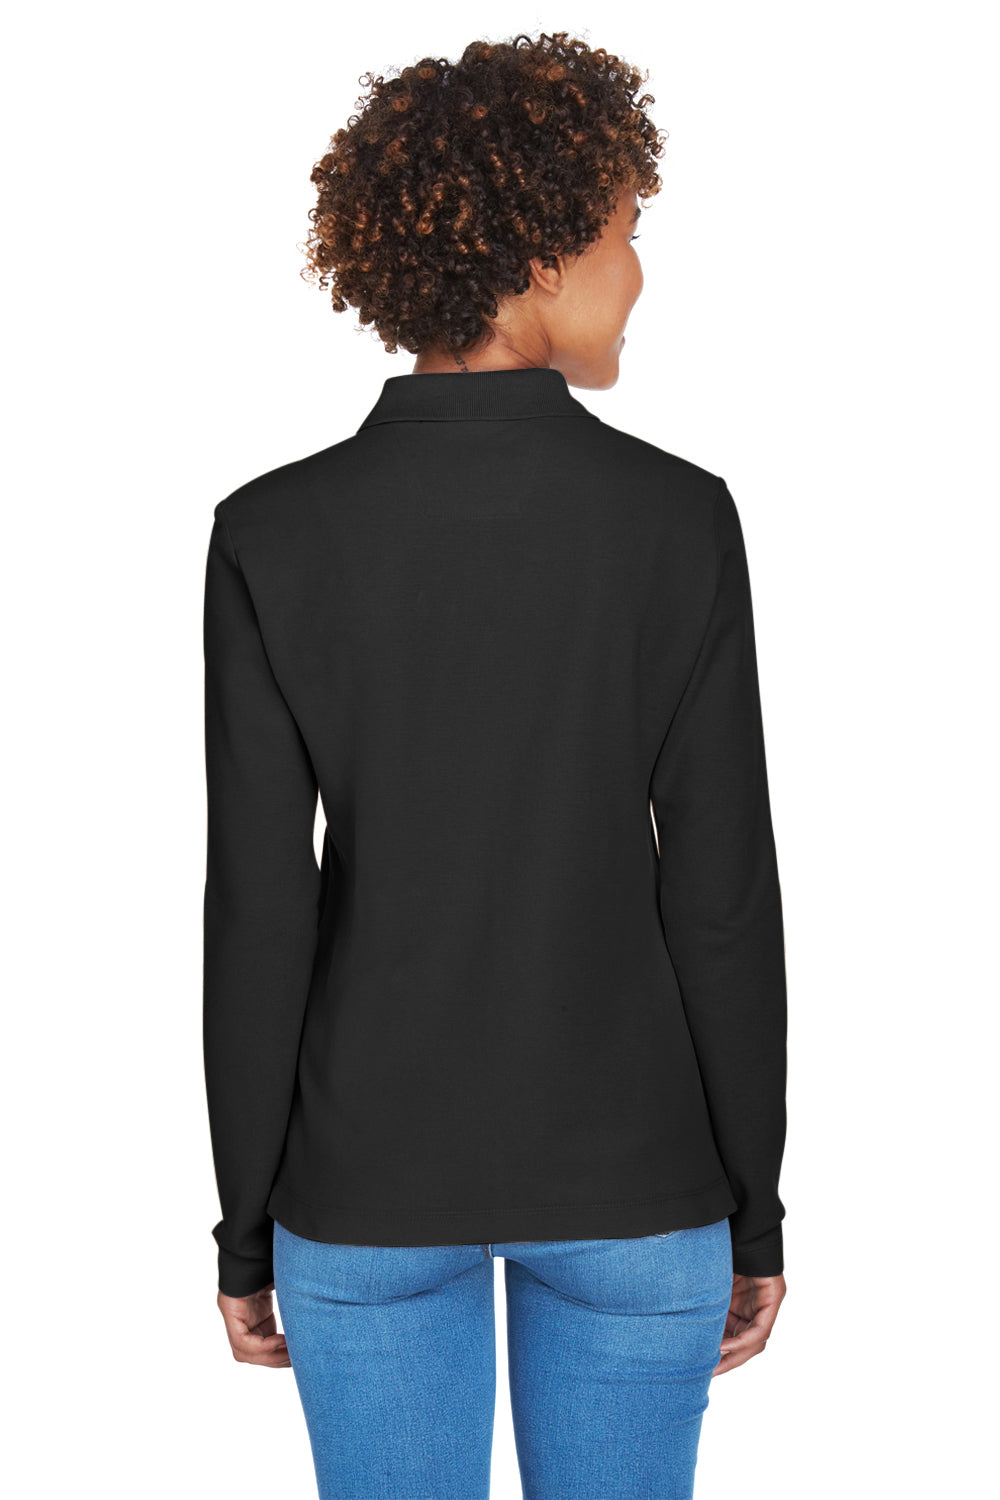 Devon & Jones D110W Womens Long Sleeve Polo Shirt Black Back